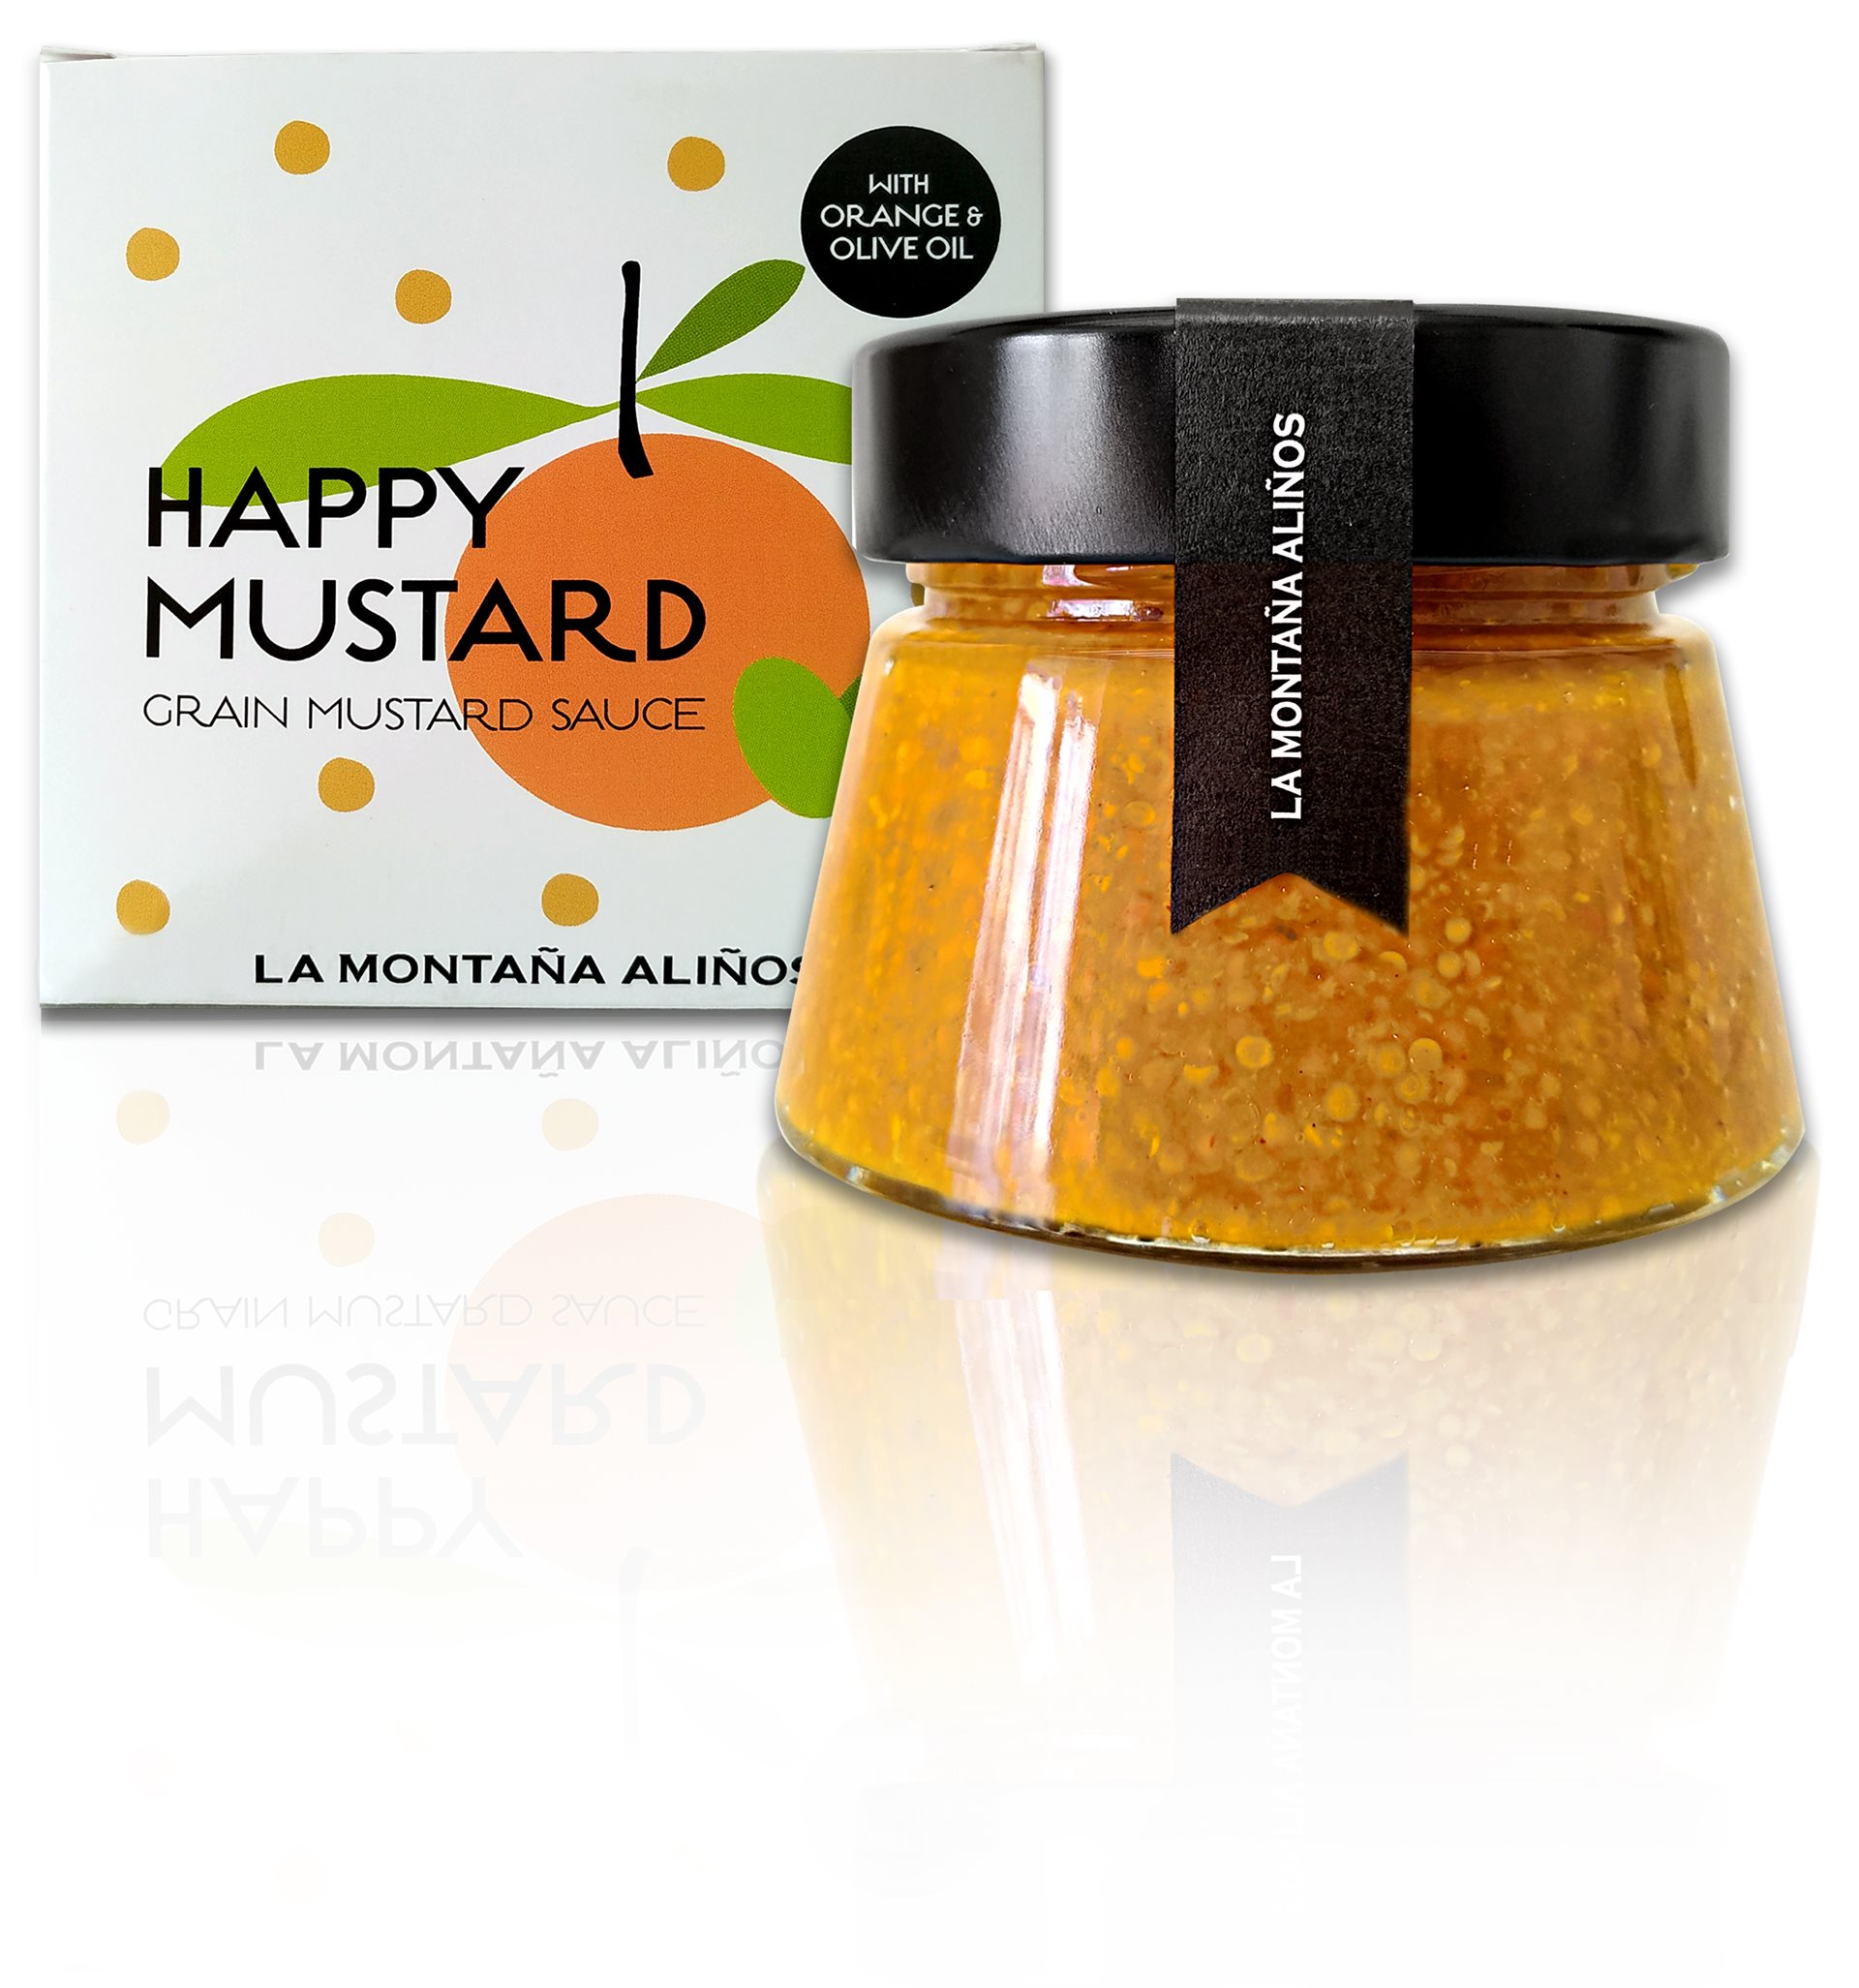 Happy Mustard: Mostassa groga en gra amb amaniment de taronja i oli d'oliva